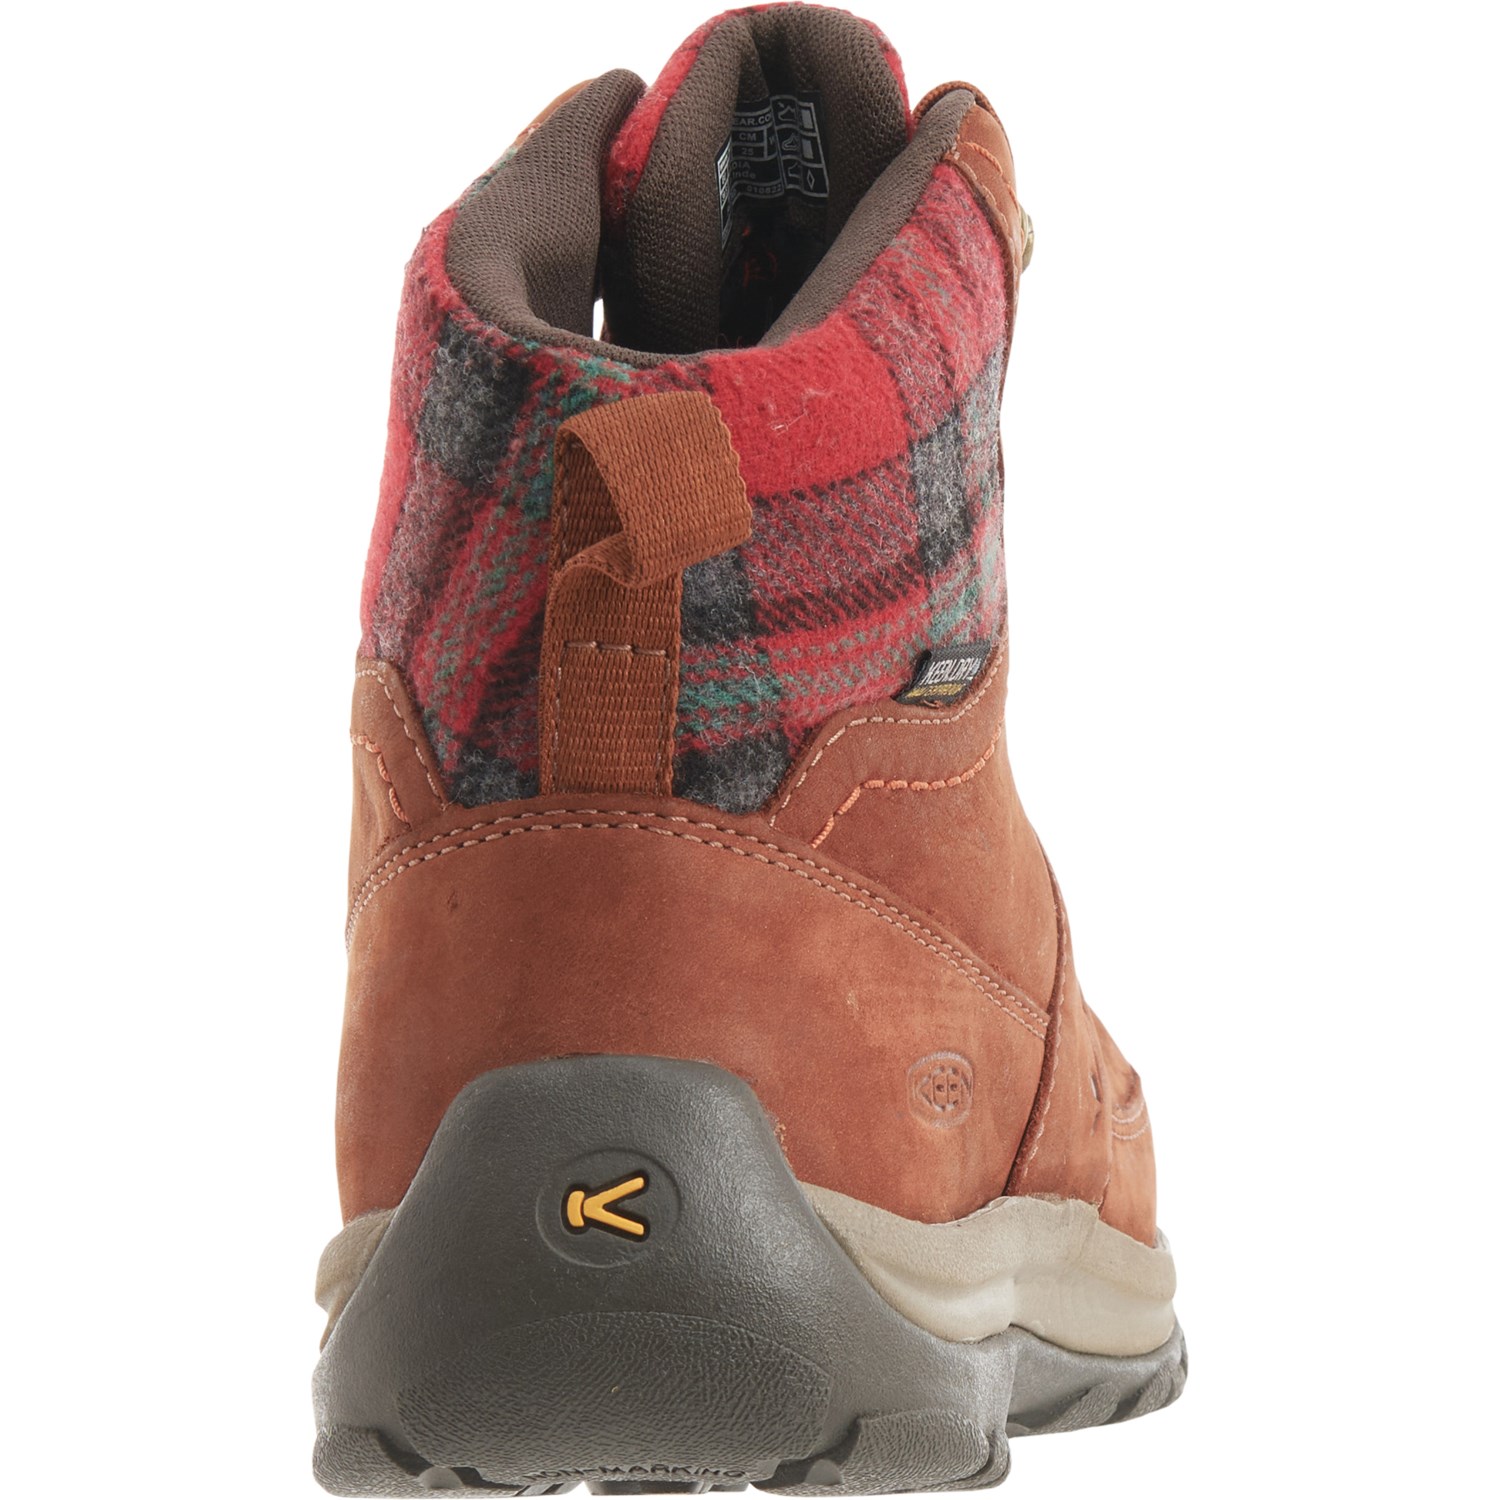 Keen Kaci III Winter Mid Boots (For Women) - Save 49%